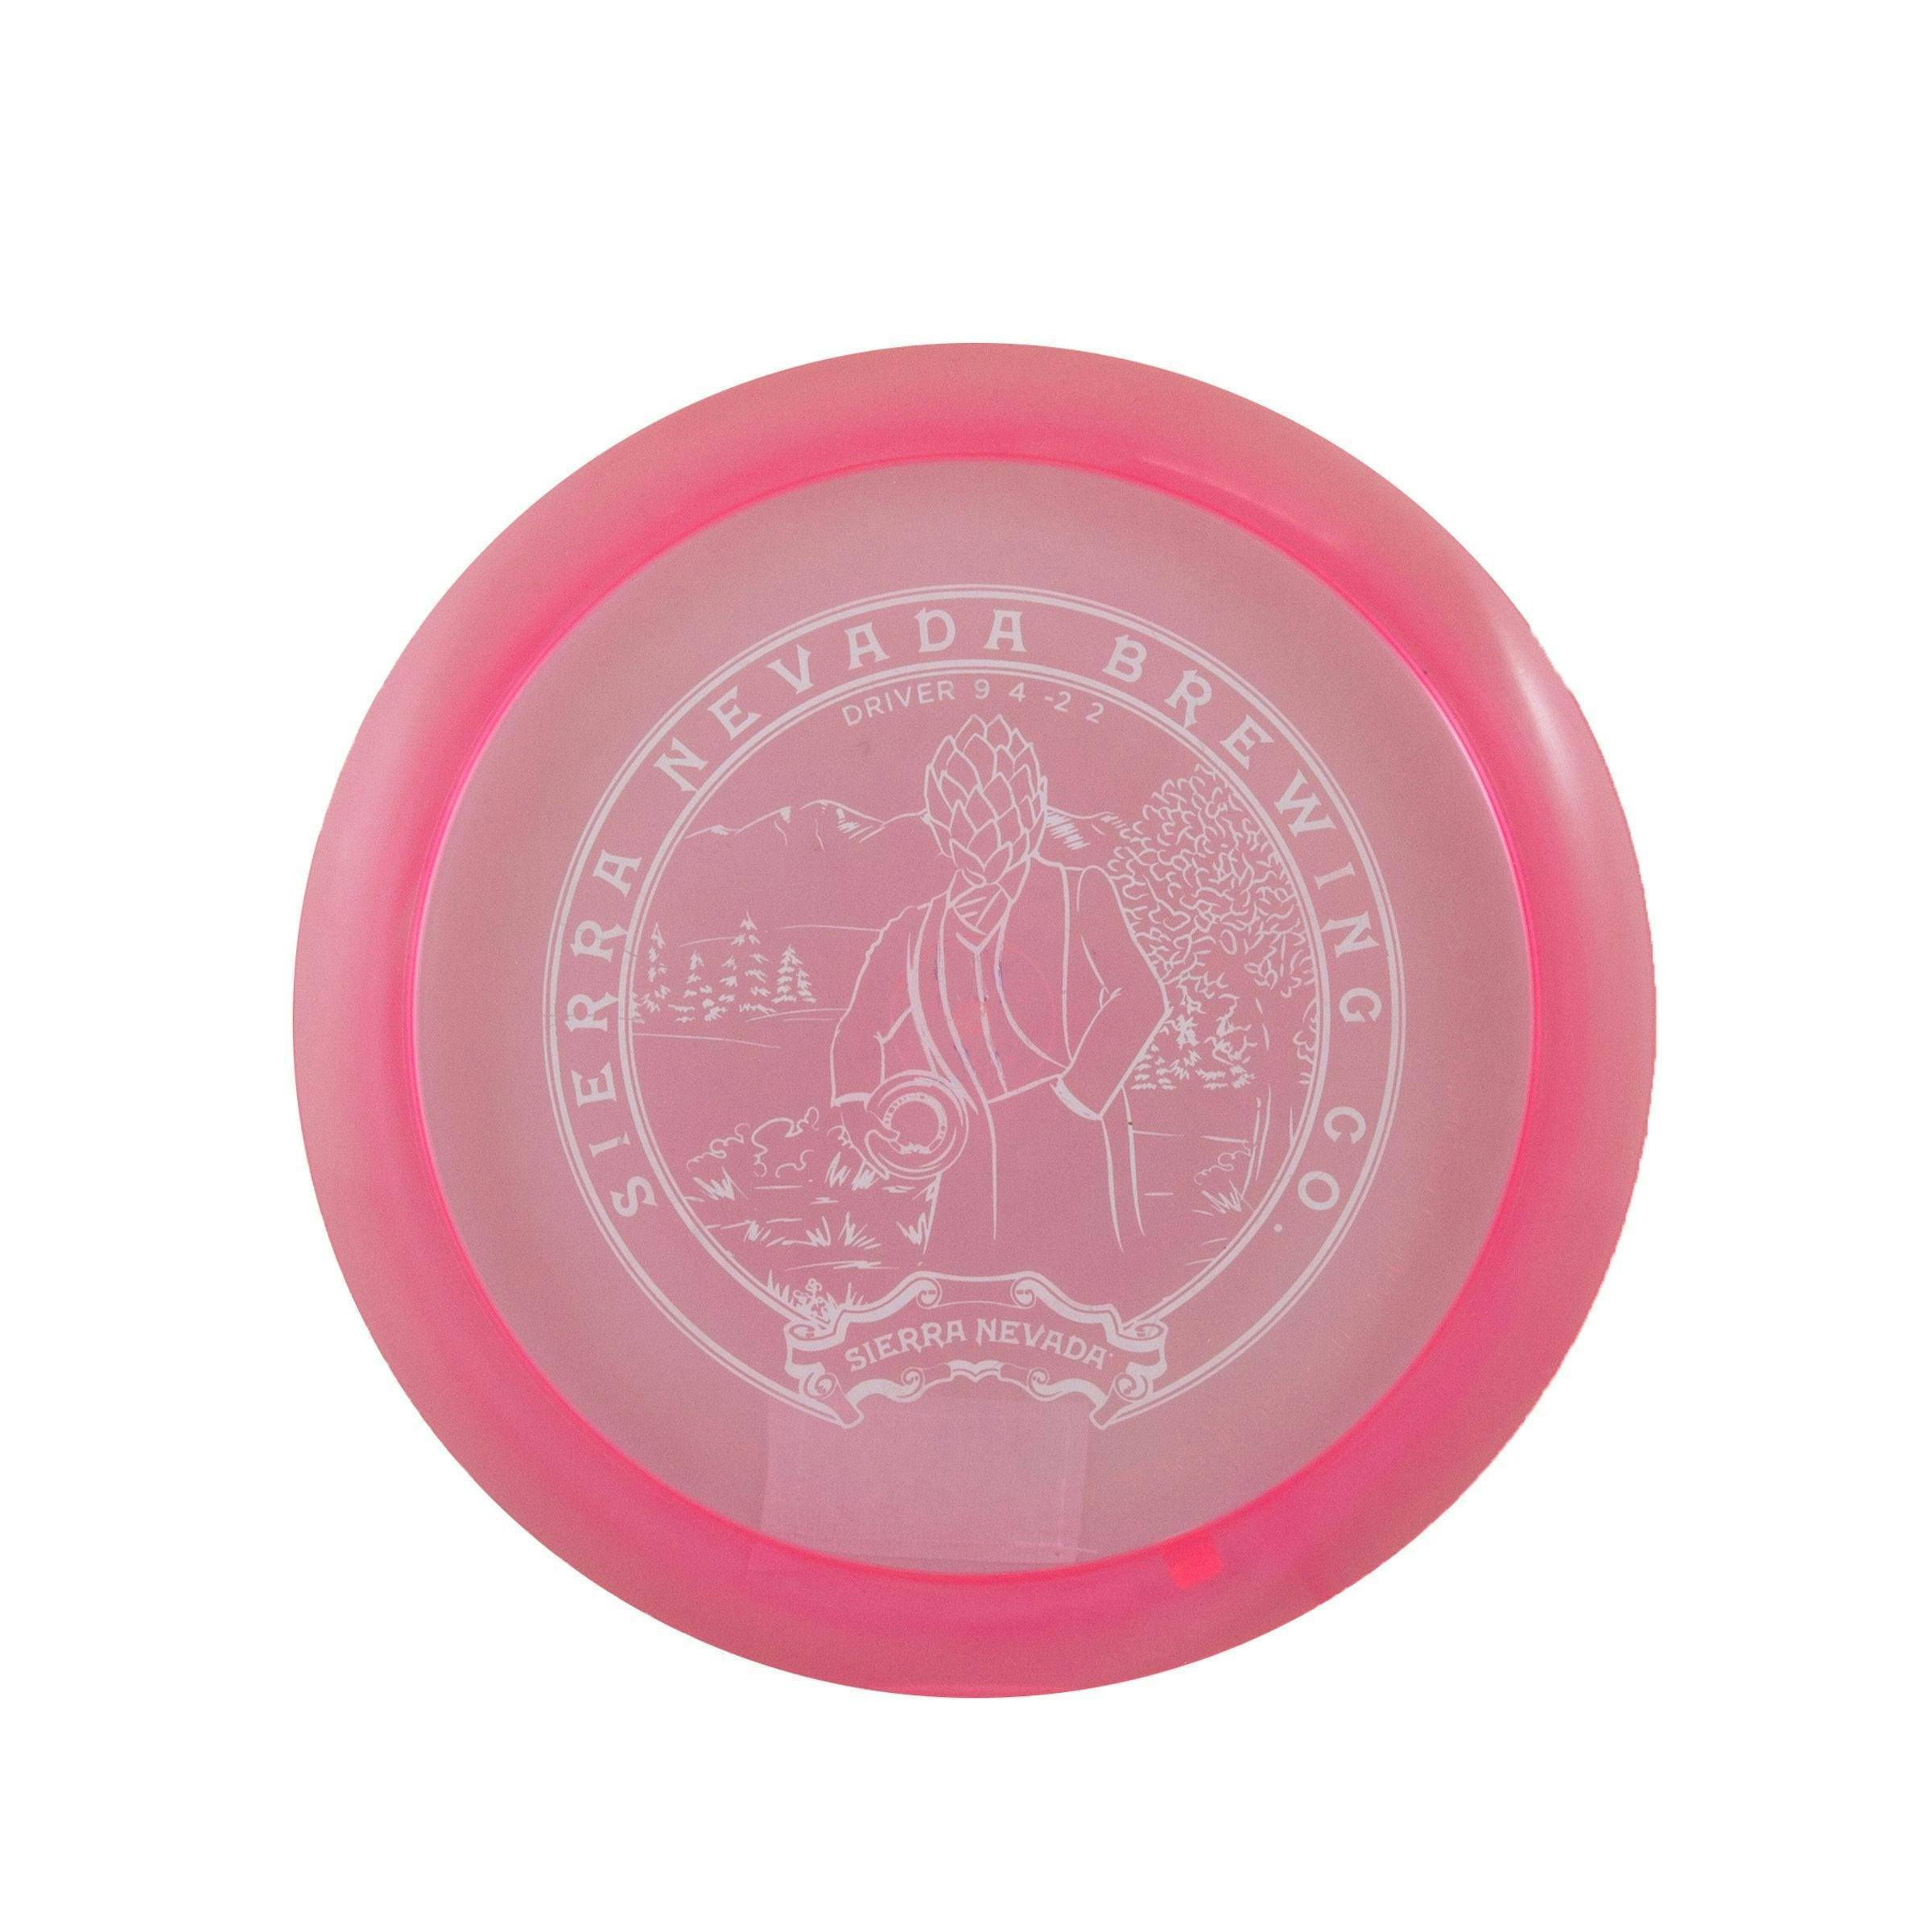 Sierra Nevada disc golf disc - pink